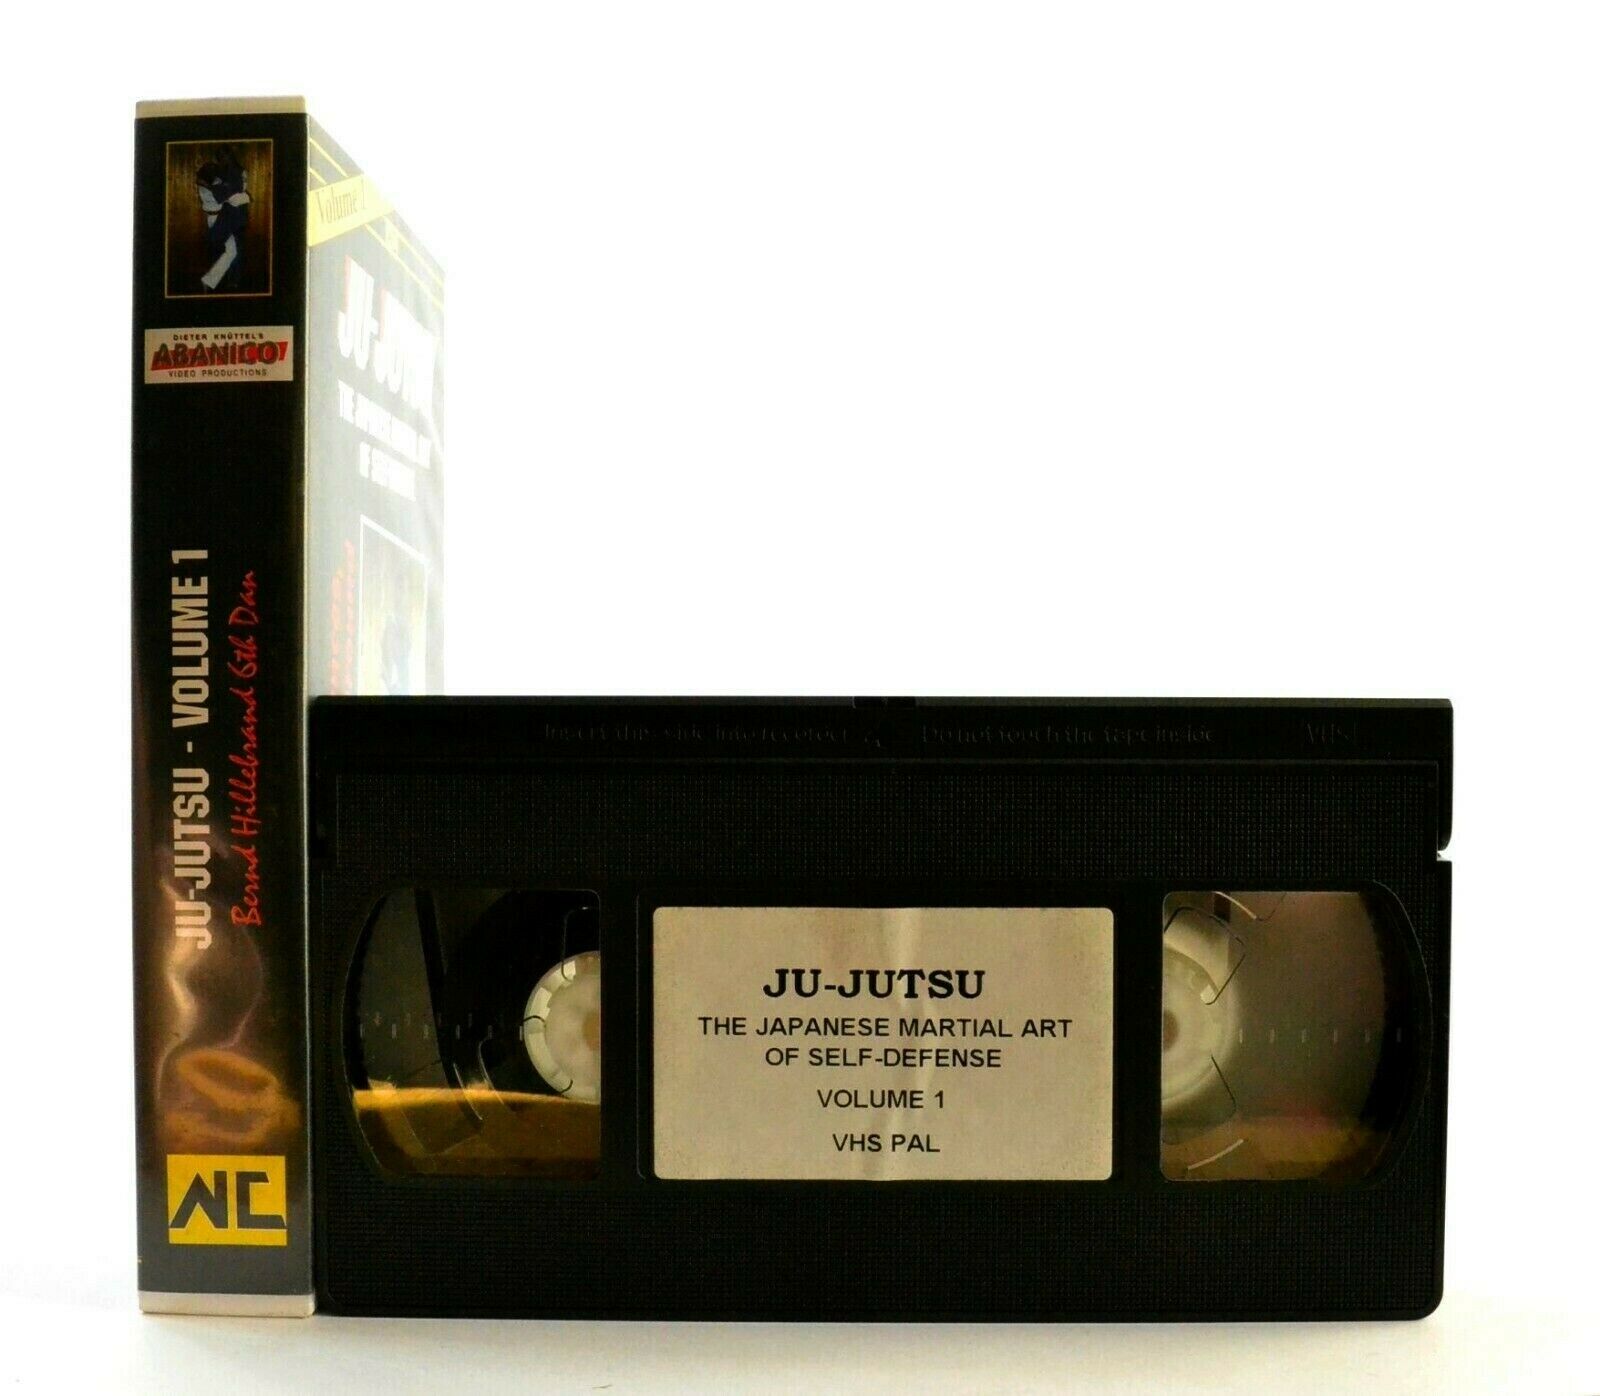 Ju-Jutsu: By Bernd Hillebrand - Japanese Martial Art Of Self Defense - Pal VHS-